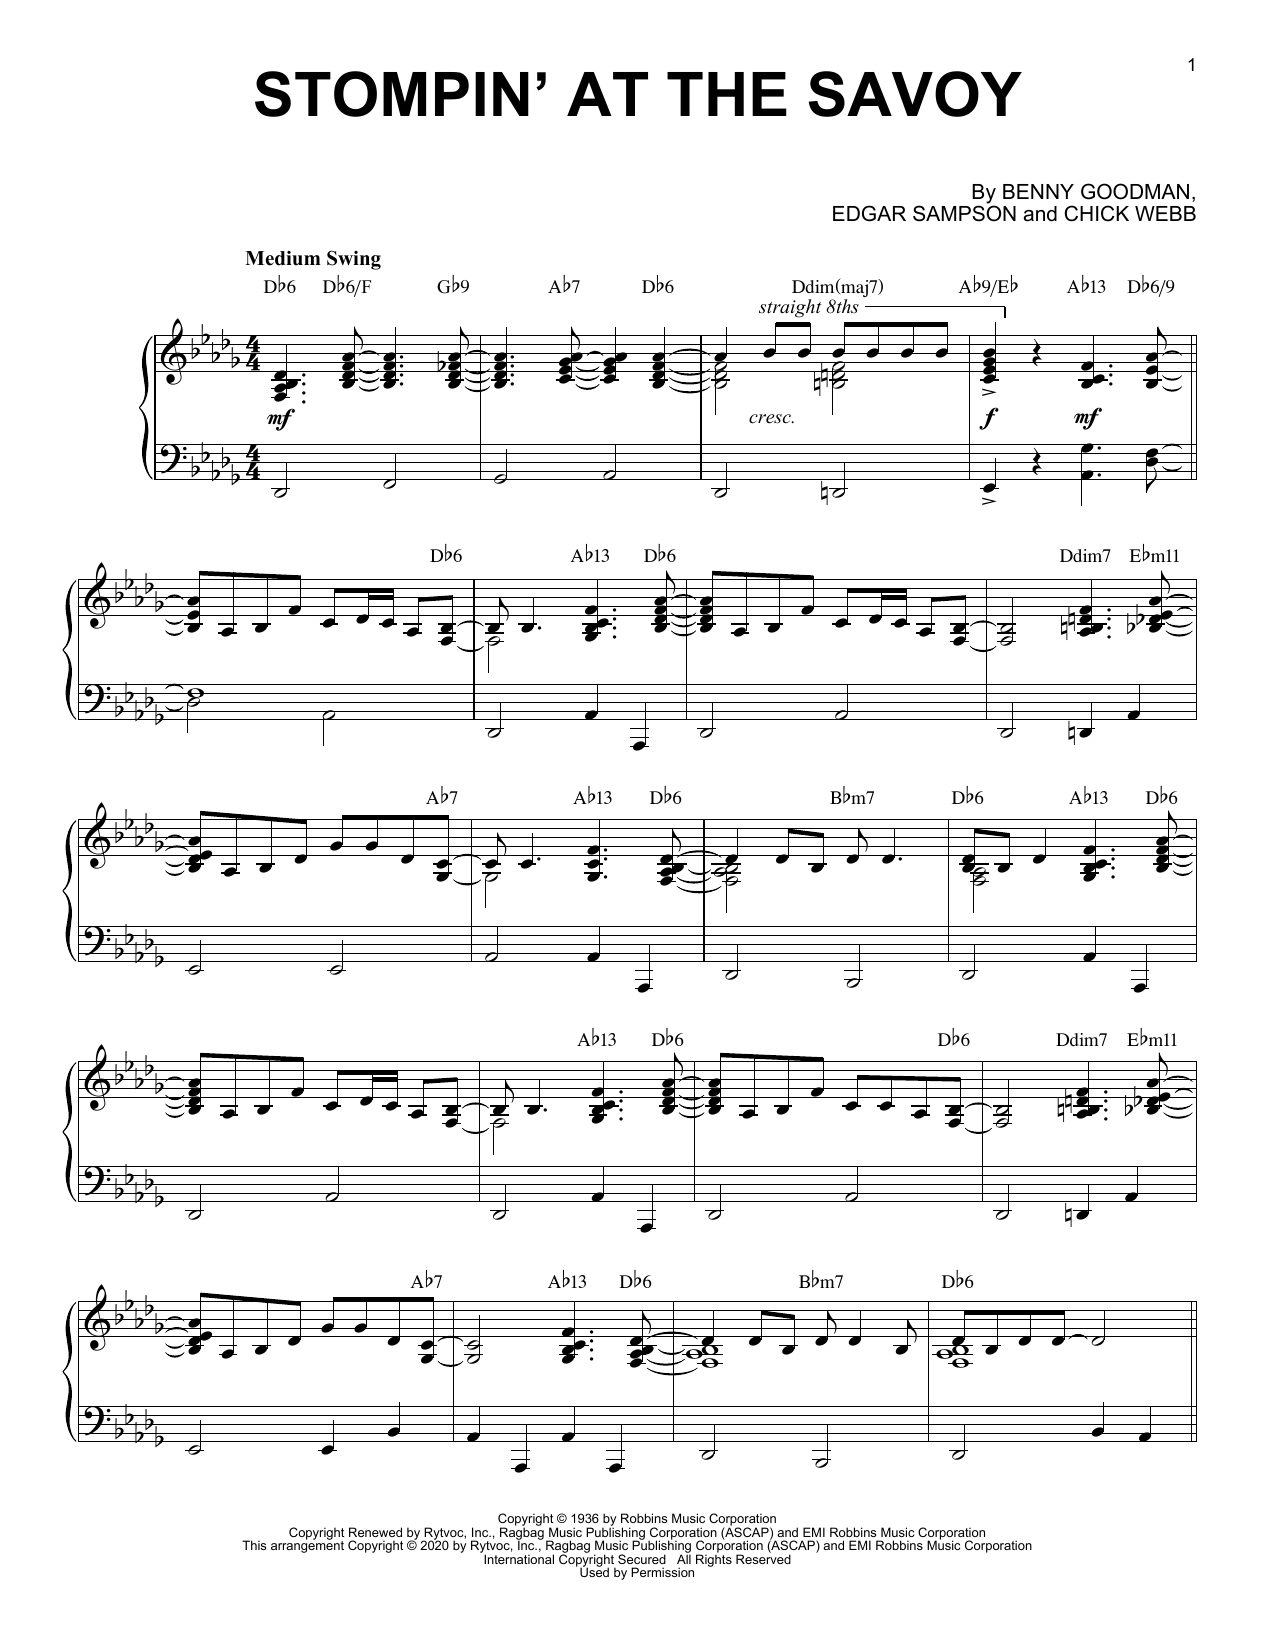 Download Benny Goodman Stompin' At The Savoy [Jazz version] (a Sheet Music